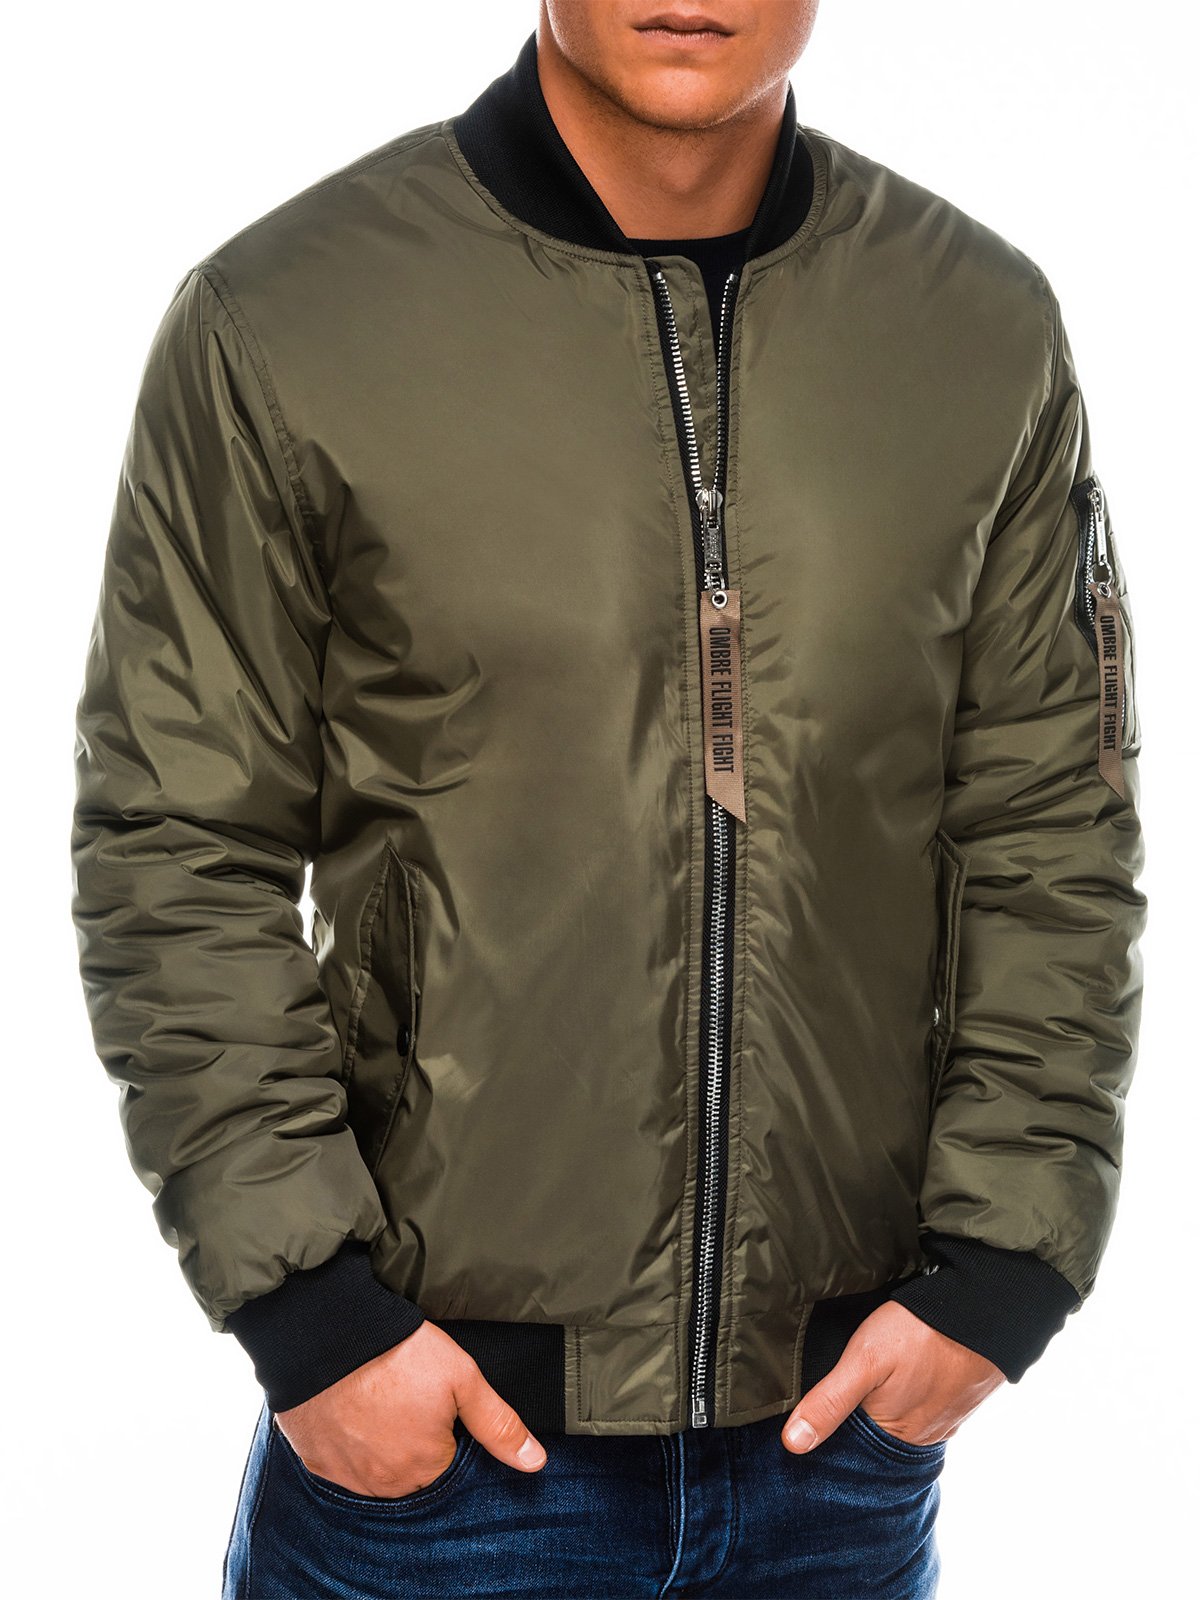 Men's mid-season bomber jacket C330 - olive | MODONE wholesale ...